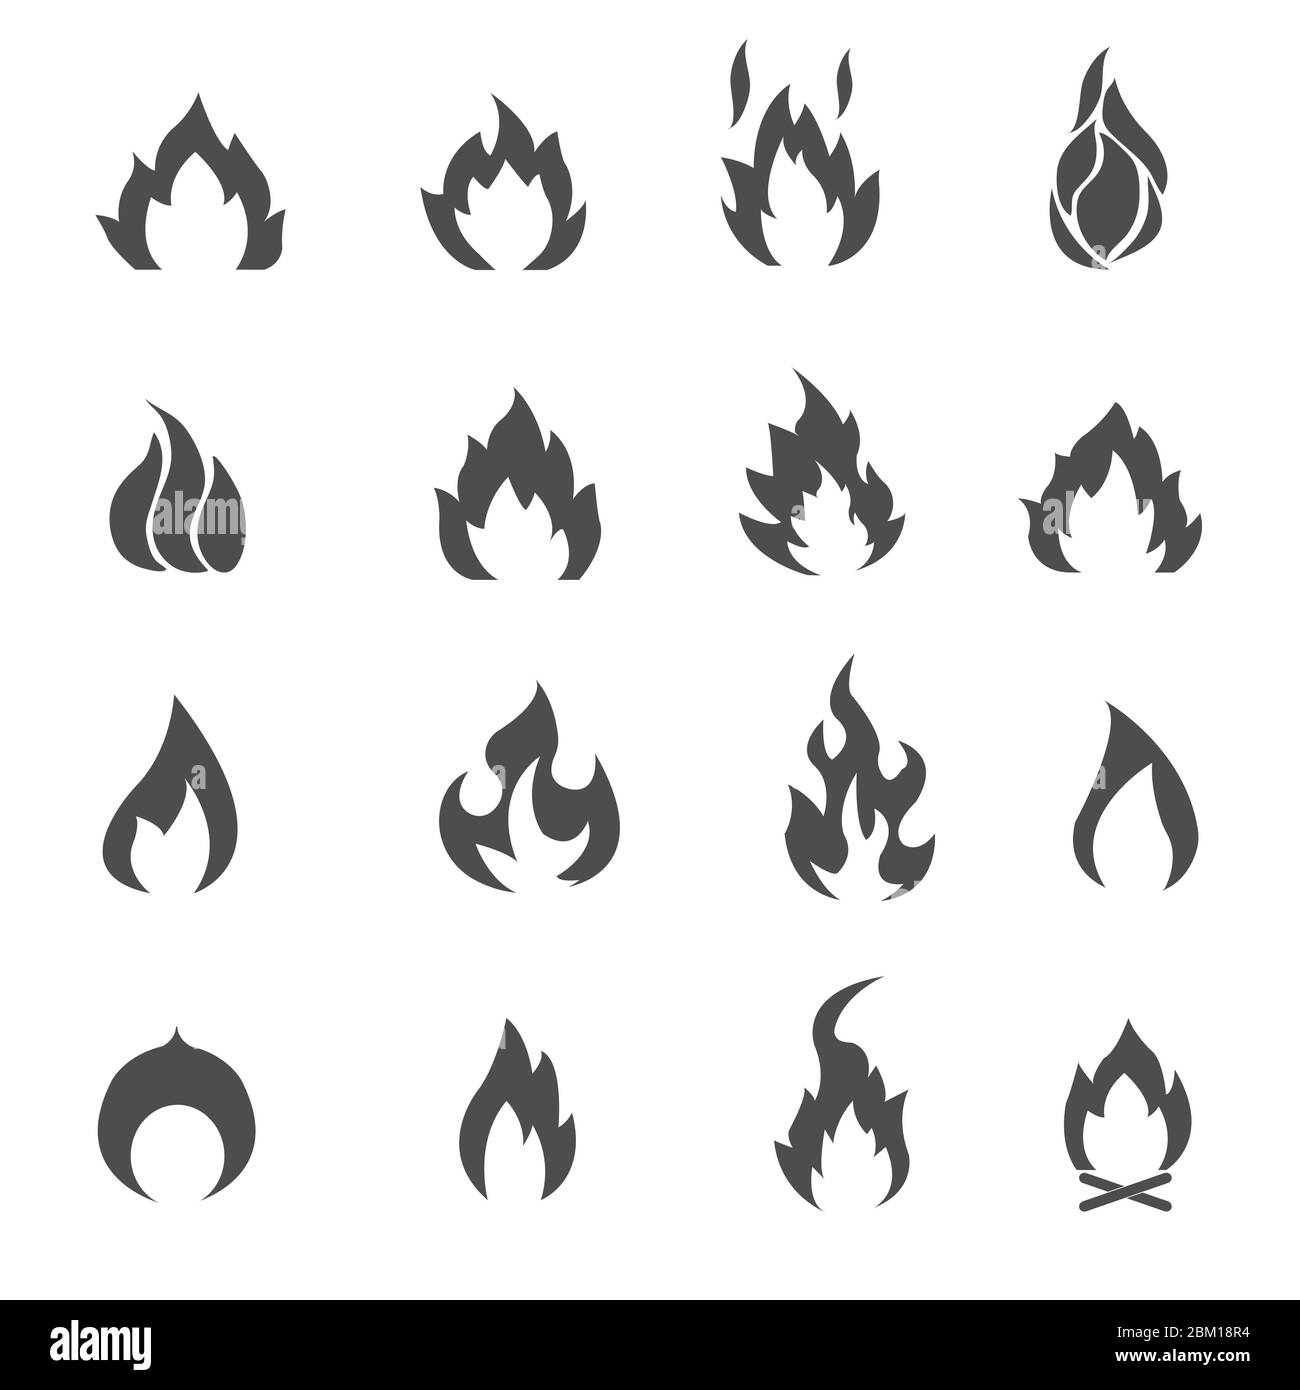 fire icons set design vector illustration Stock Photo